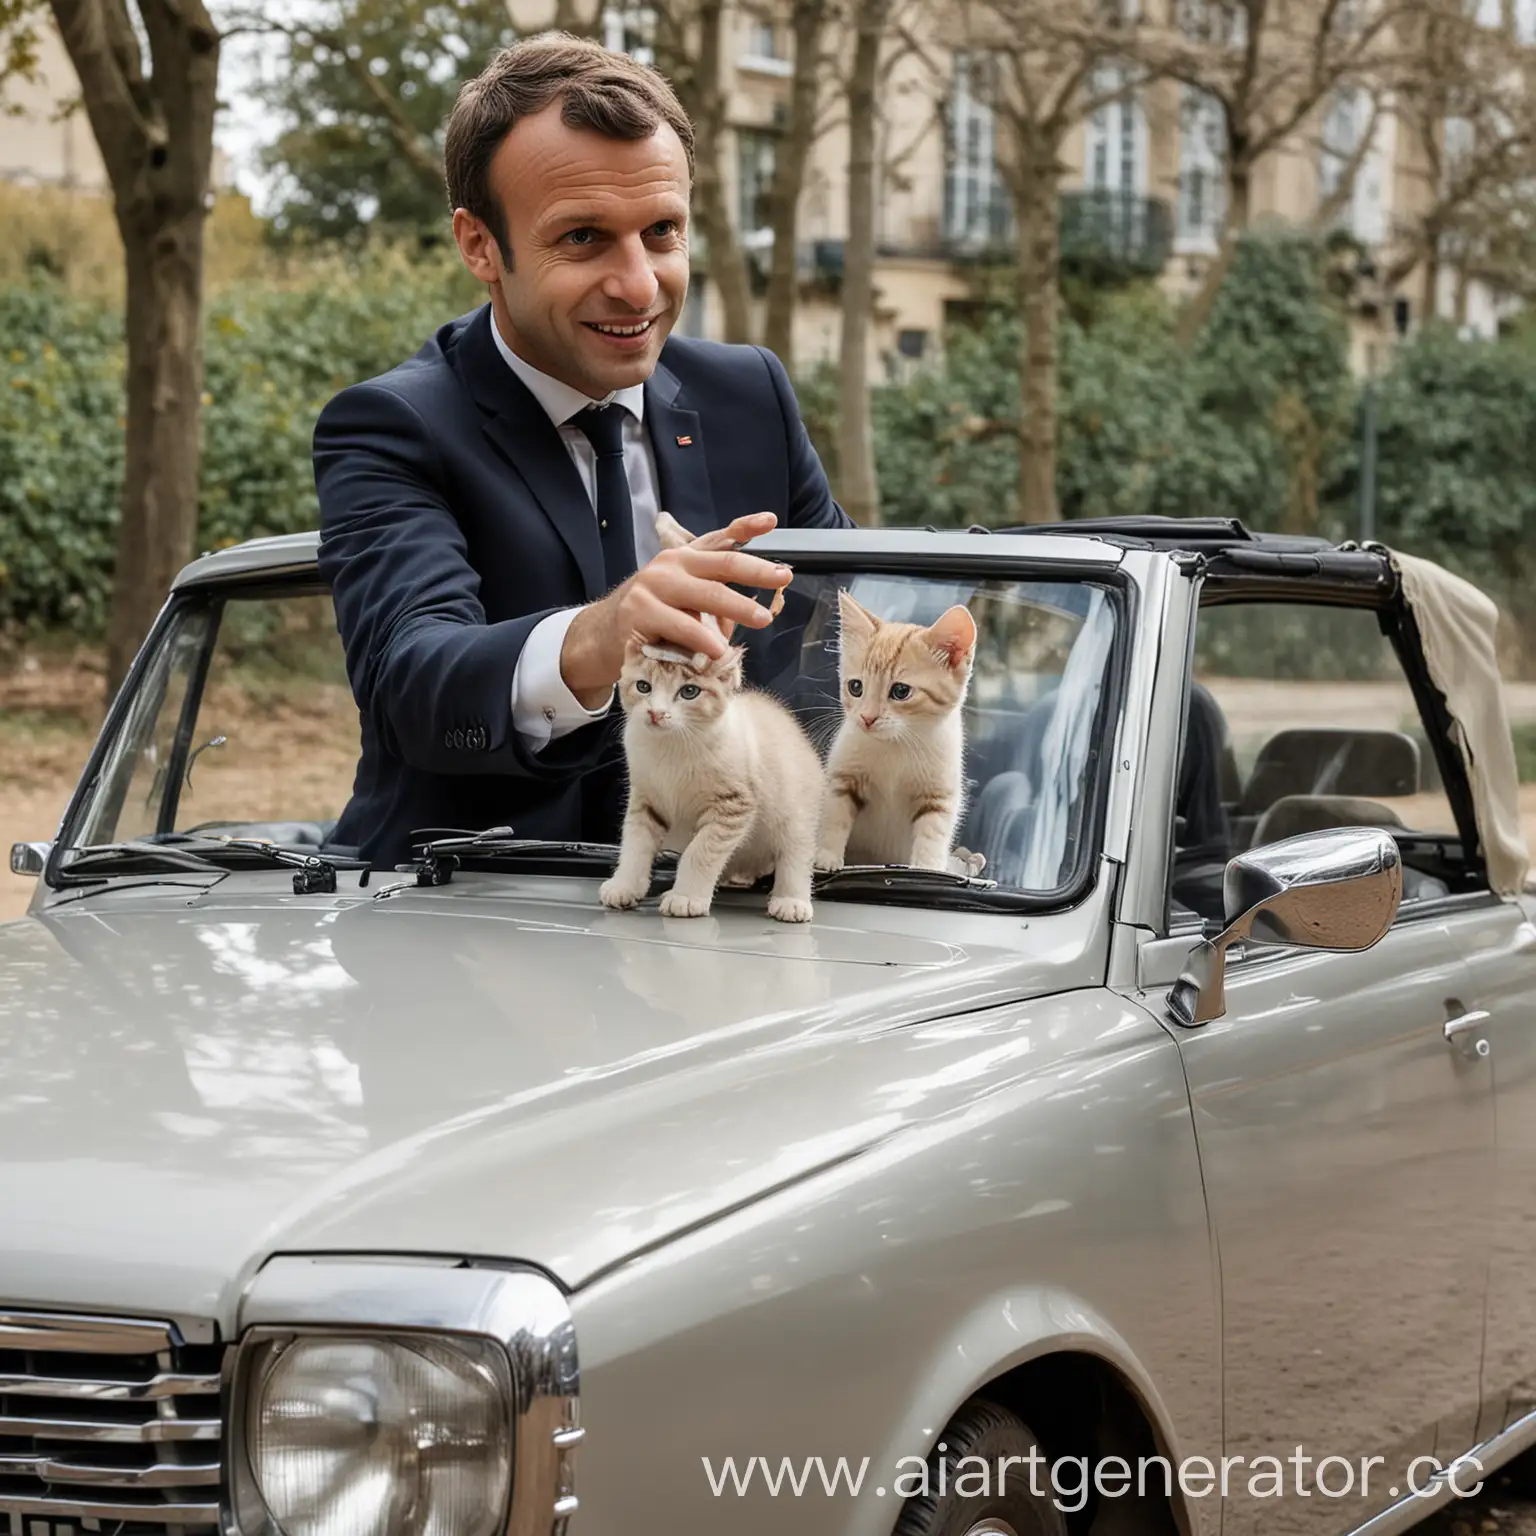 Hungry-Kitten-Eating-with-Emmanuel-Macron-in-Citroen-Luxury-Car